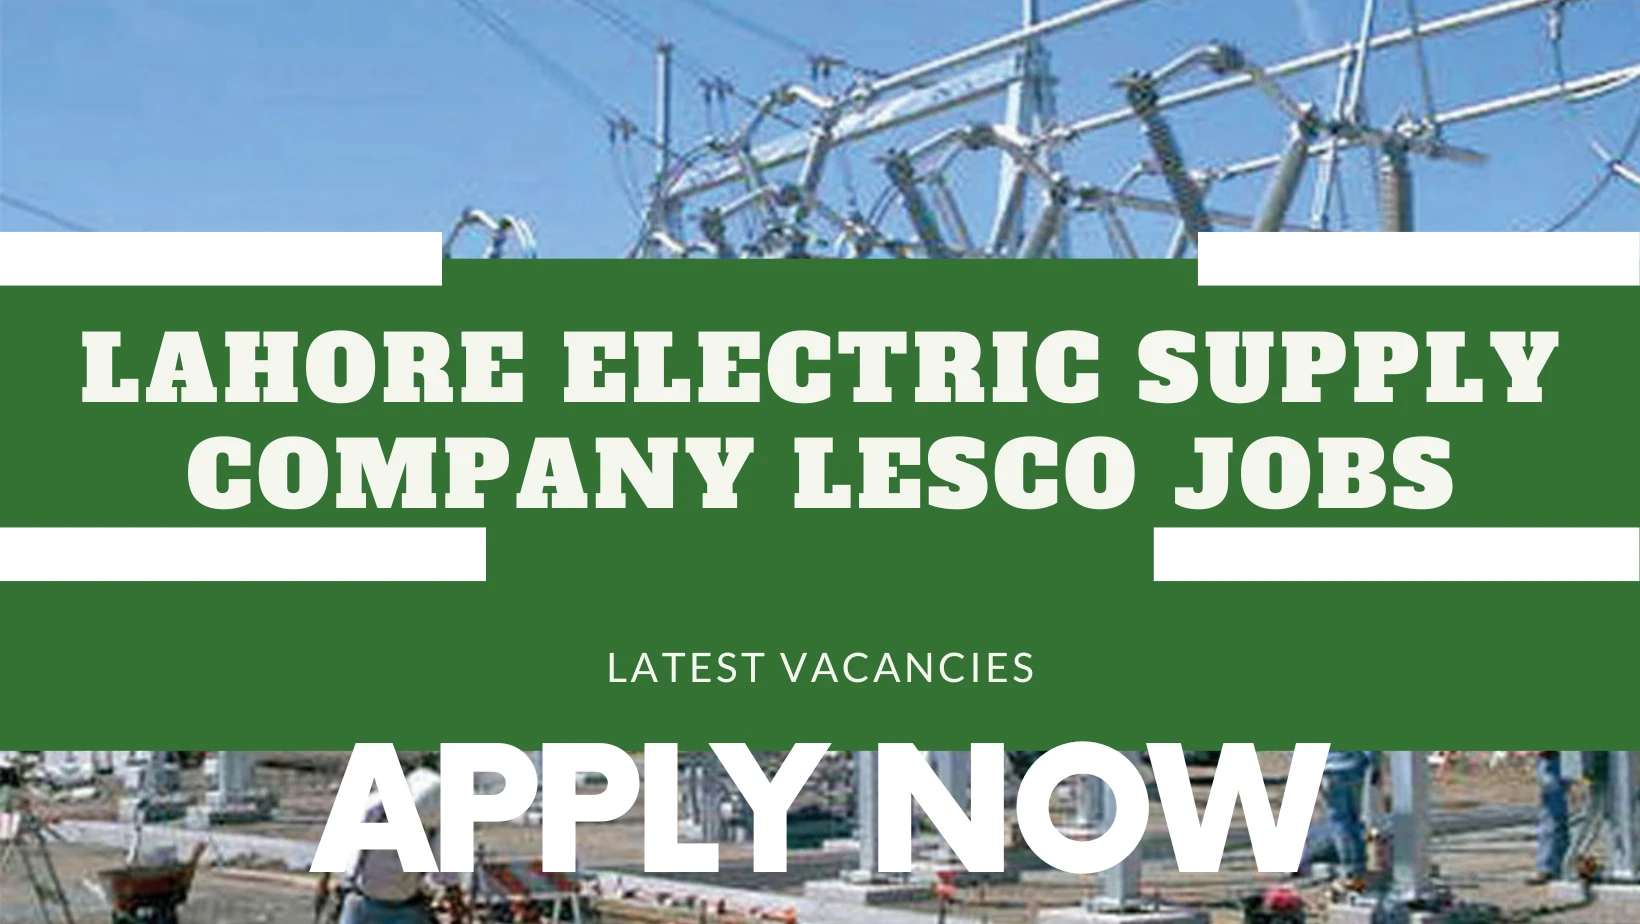 LAHORE ELECTRIC SUPPLY COMPANY LESCO JOBS